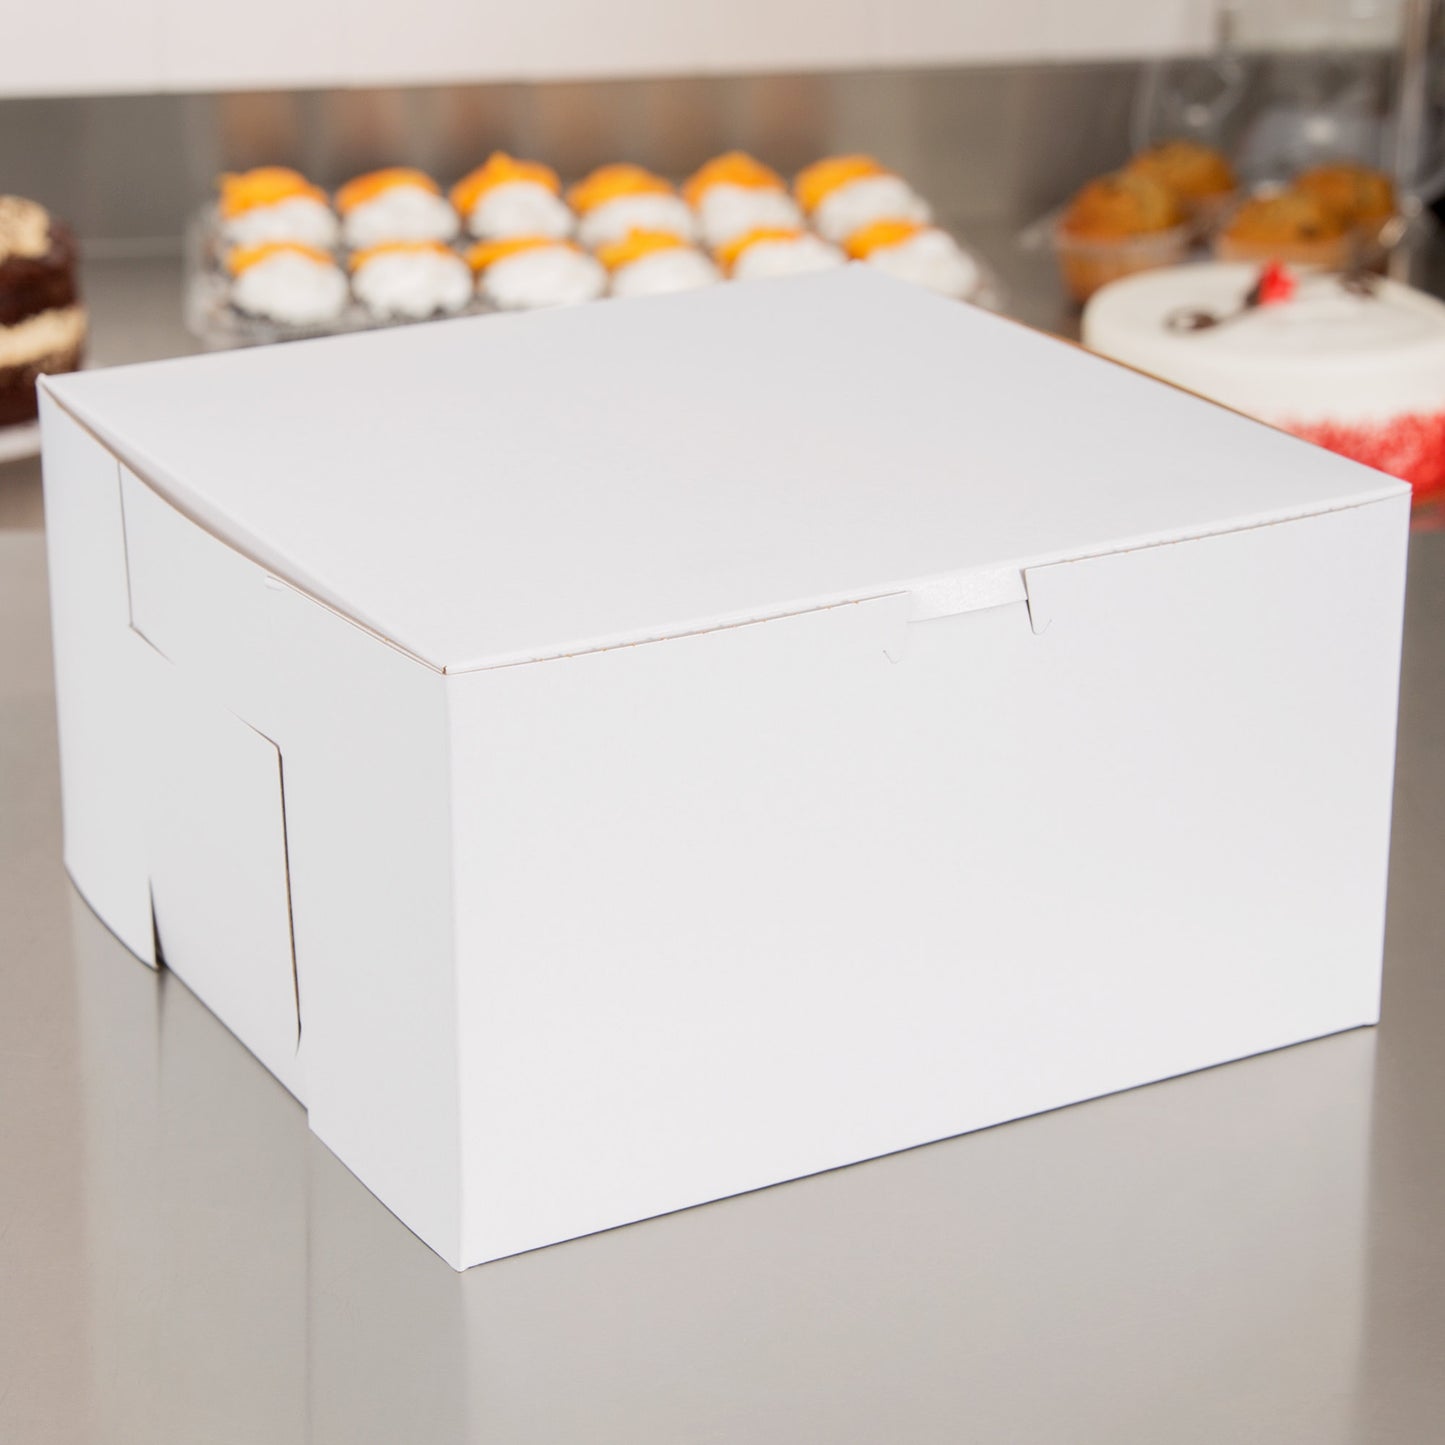 12 Inch Cake Box - 12x12x6